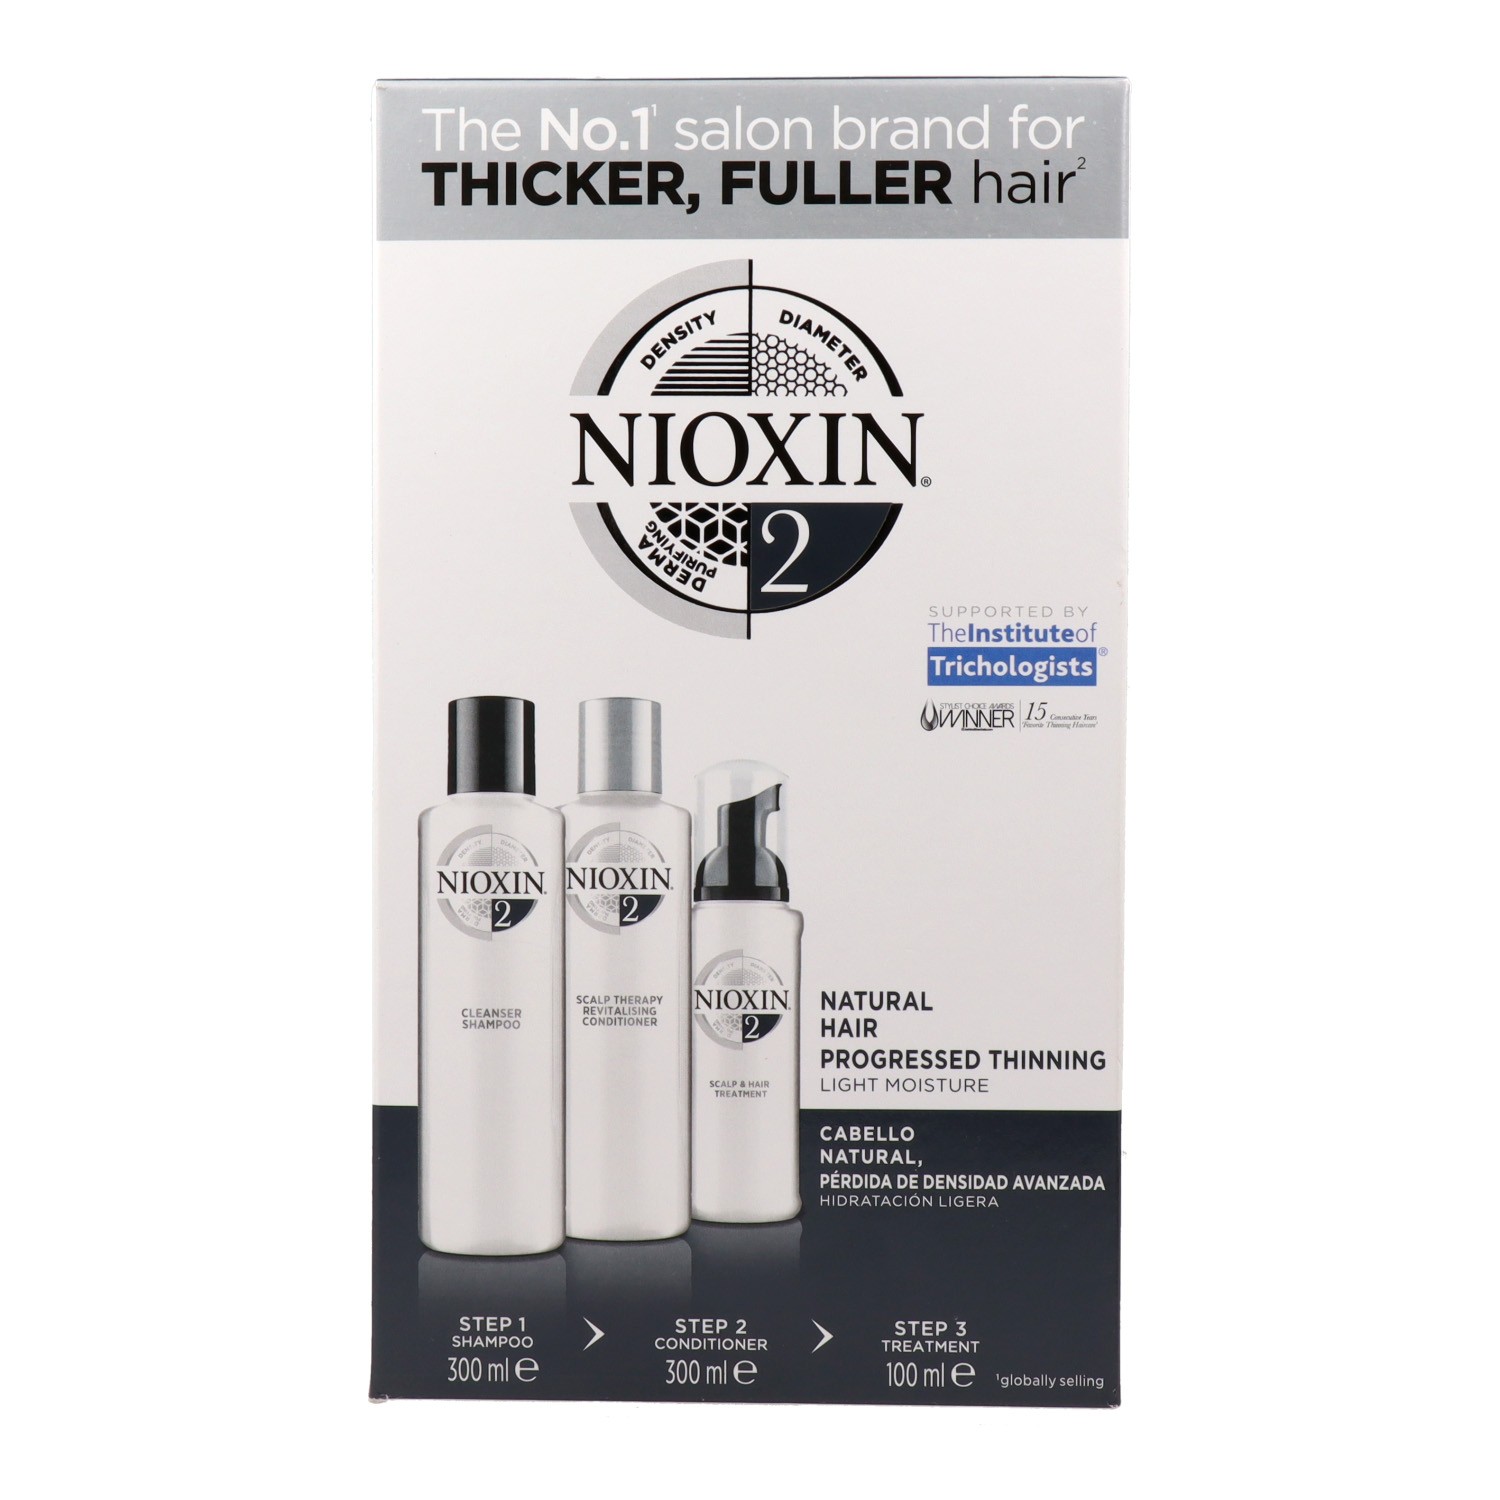 Nioxin Trial Kit Sist 2 Light Moisturizer for Natural Hair